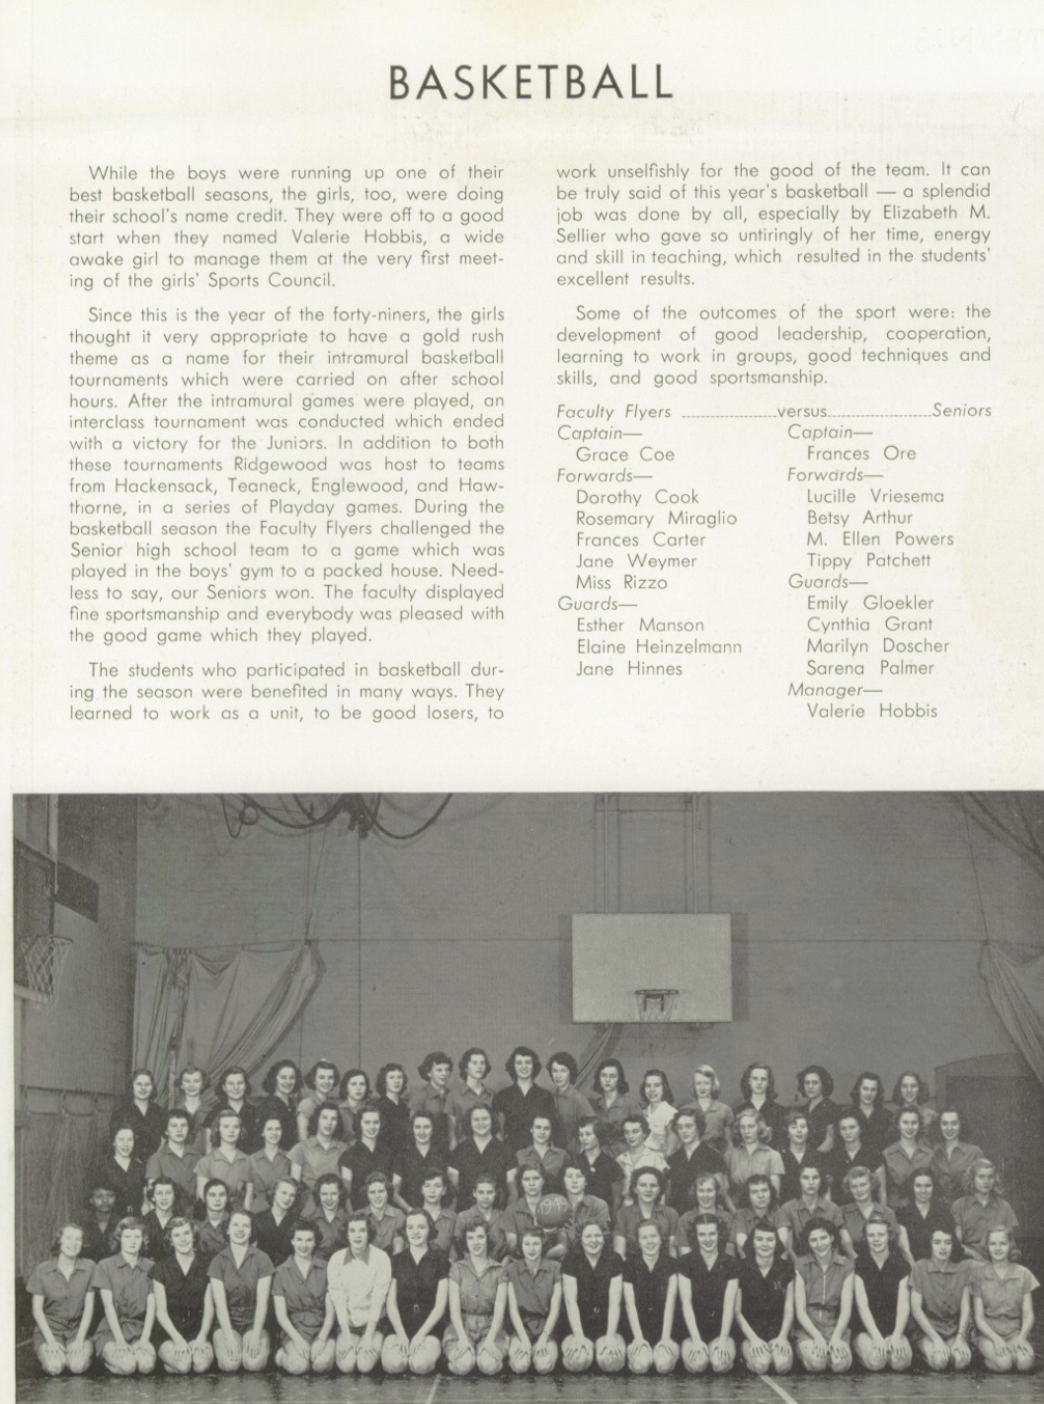 1949 Girls’ Basketball Team